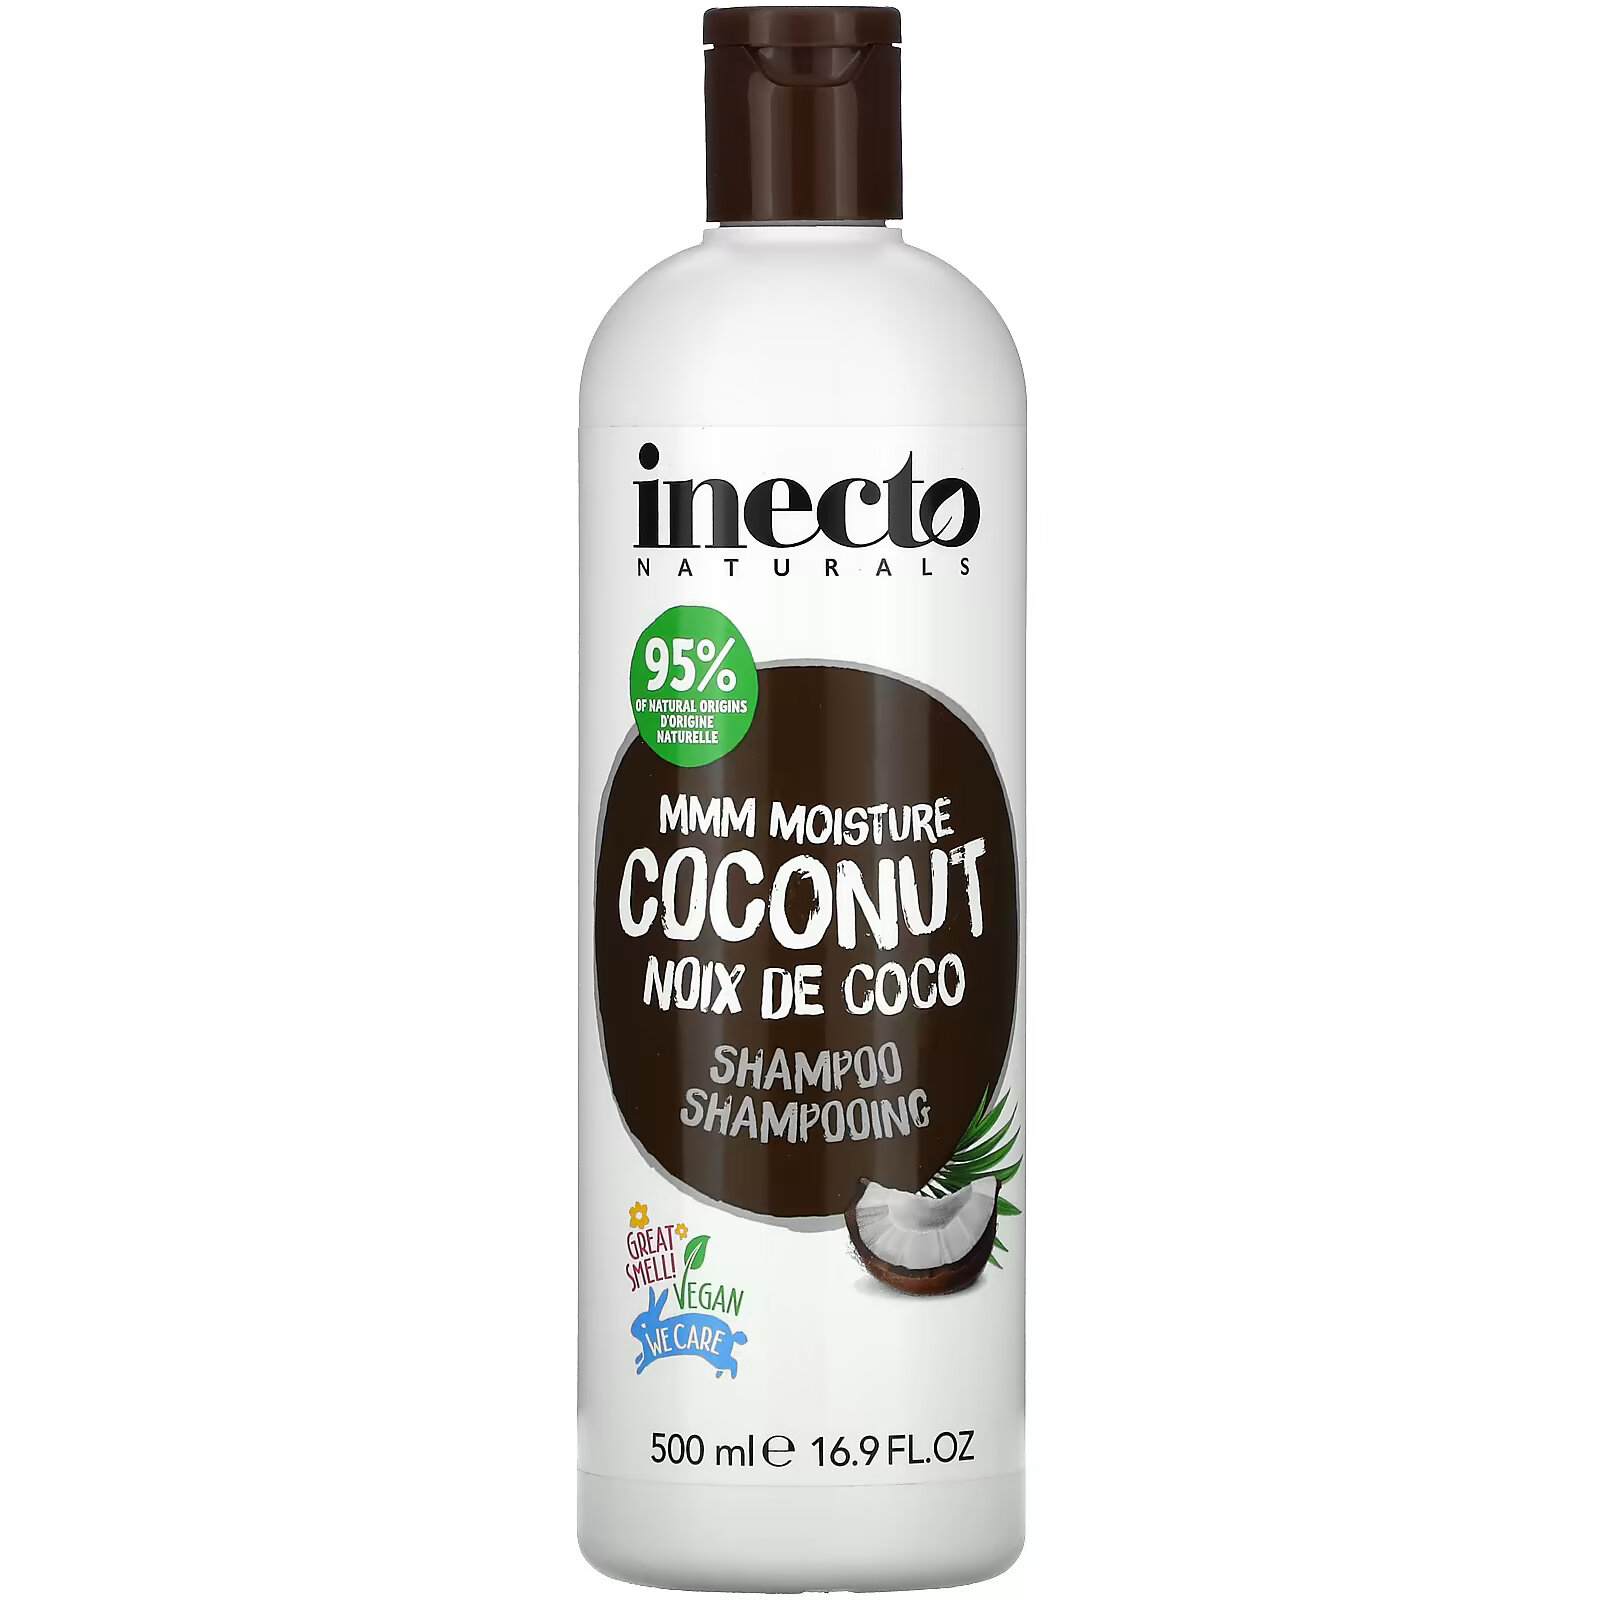 Inecto, Mmm Moisture Coconut, шампунь, 500 мл (16,9 жидких унций) inecto super shine argan шампунь 16 9 жидких унций 500 мл